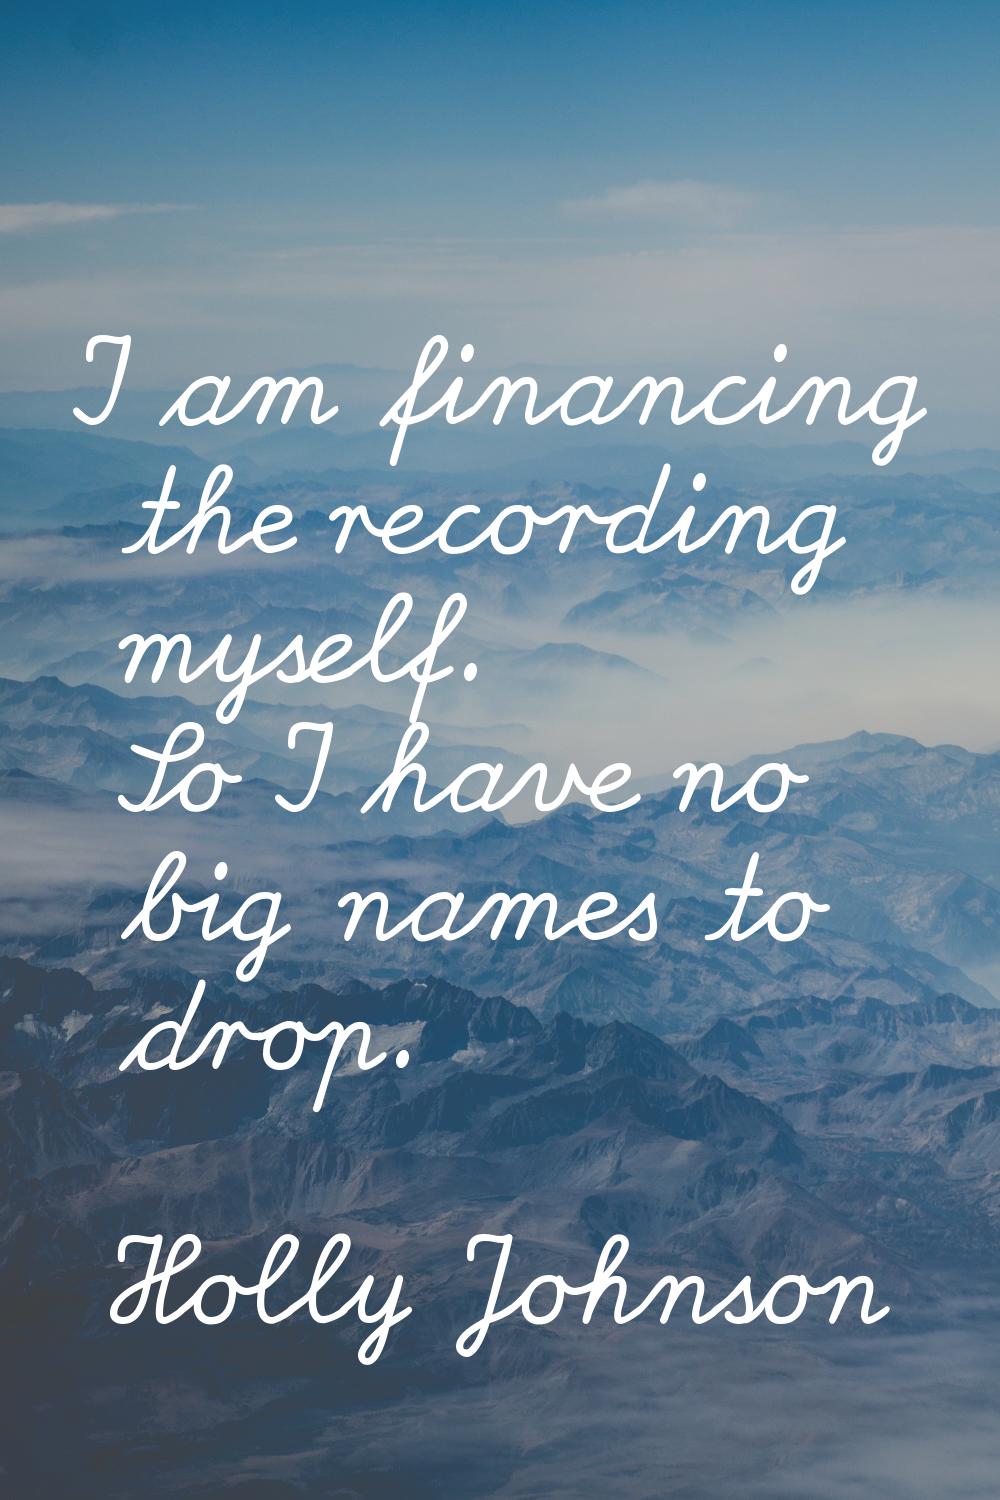 I am financing the recording myself. So I have no big names to drop.